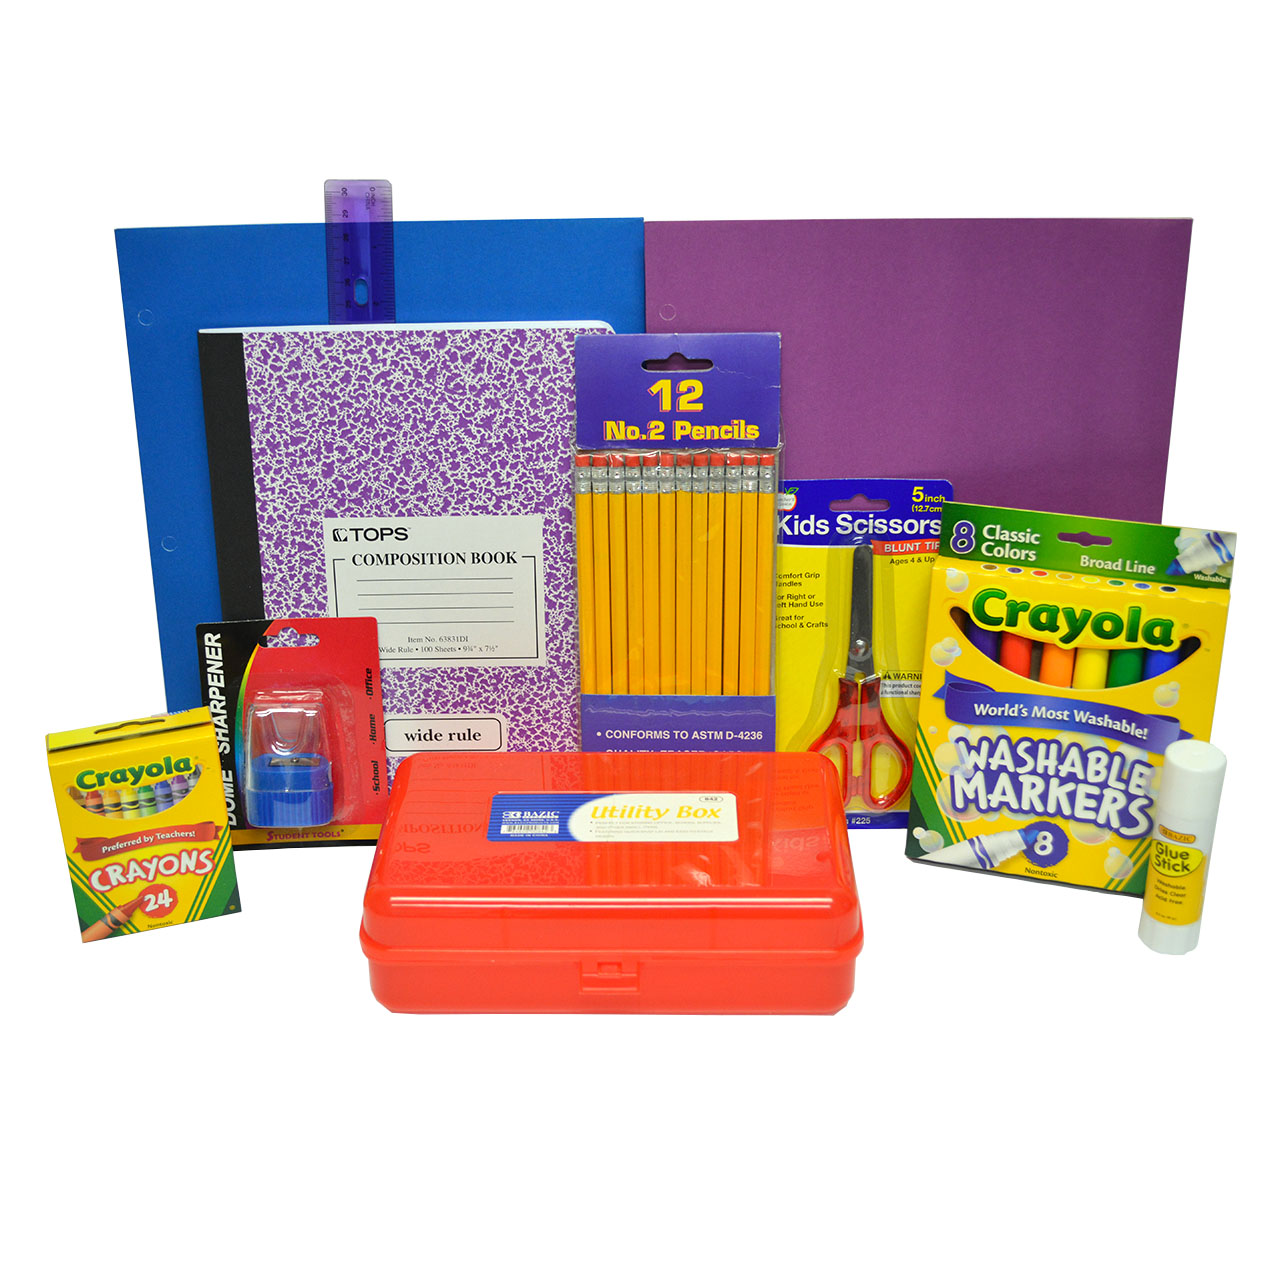 Standard Kindergarten School Supply Kit (003-SSKKIN)